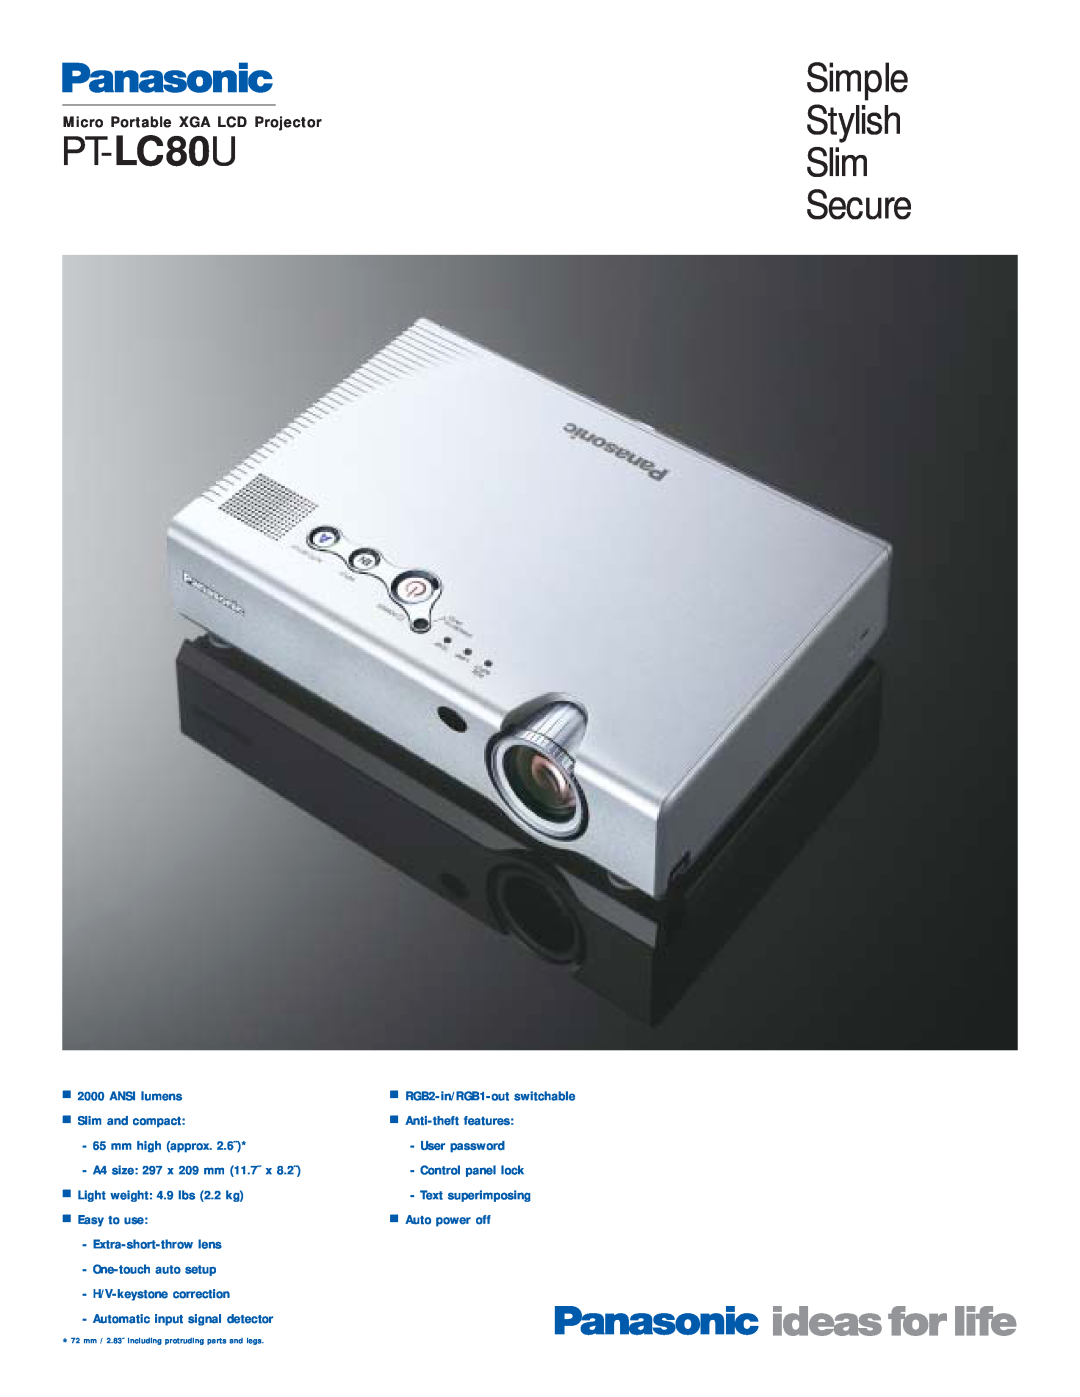 Panasonic PT-LC80U manual Simple Stylish Slim Secure, Micro Portable XGA LCD Projector 